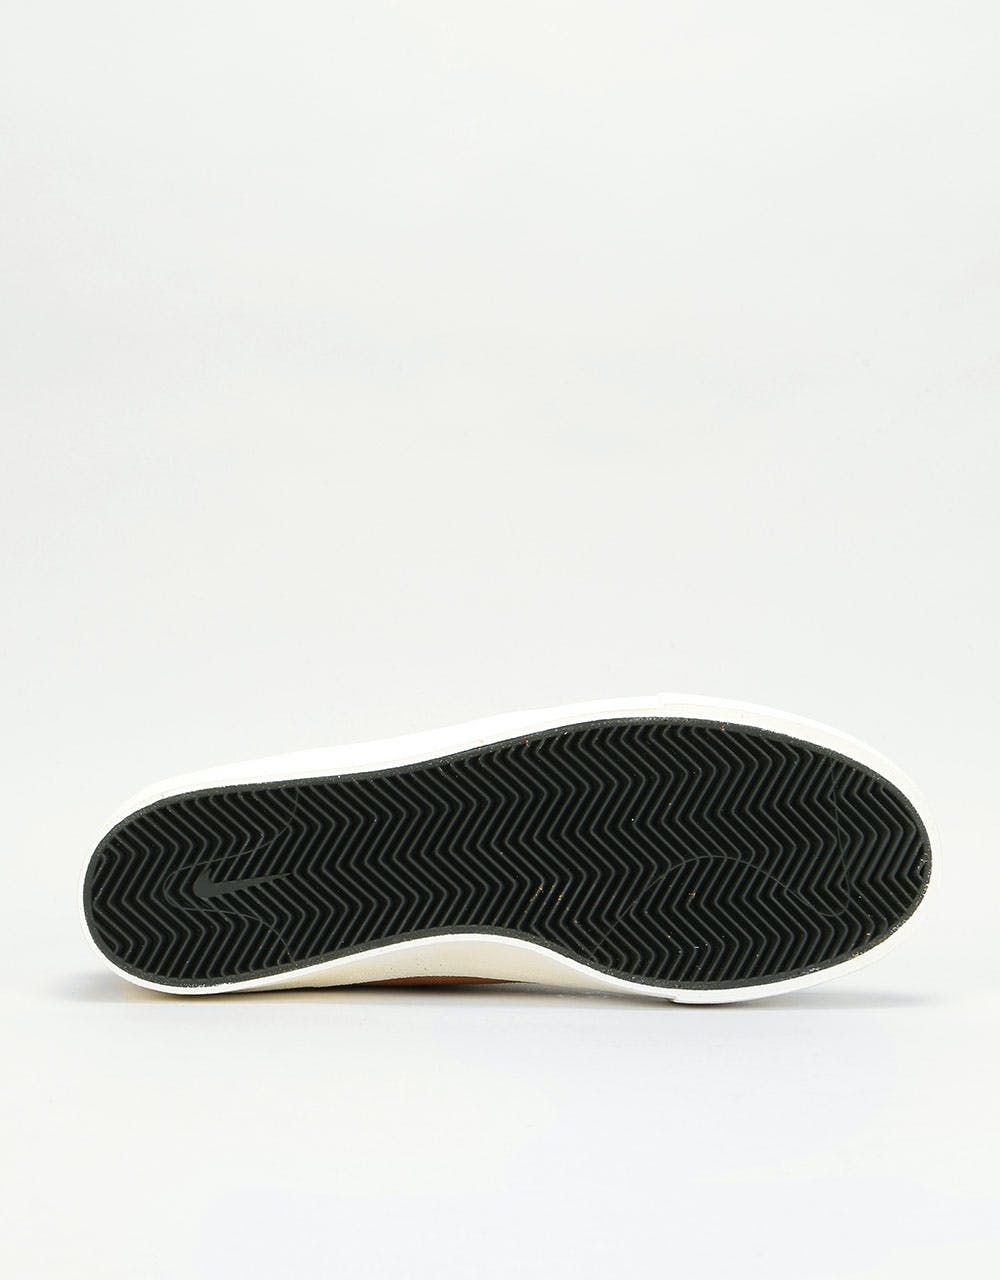 Nike SB Zoom Janoski Mid Crafted Skate Shoes - Lt British Tan/Black